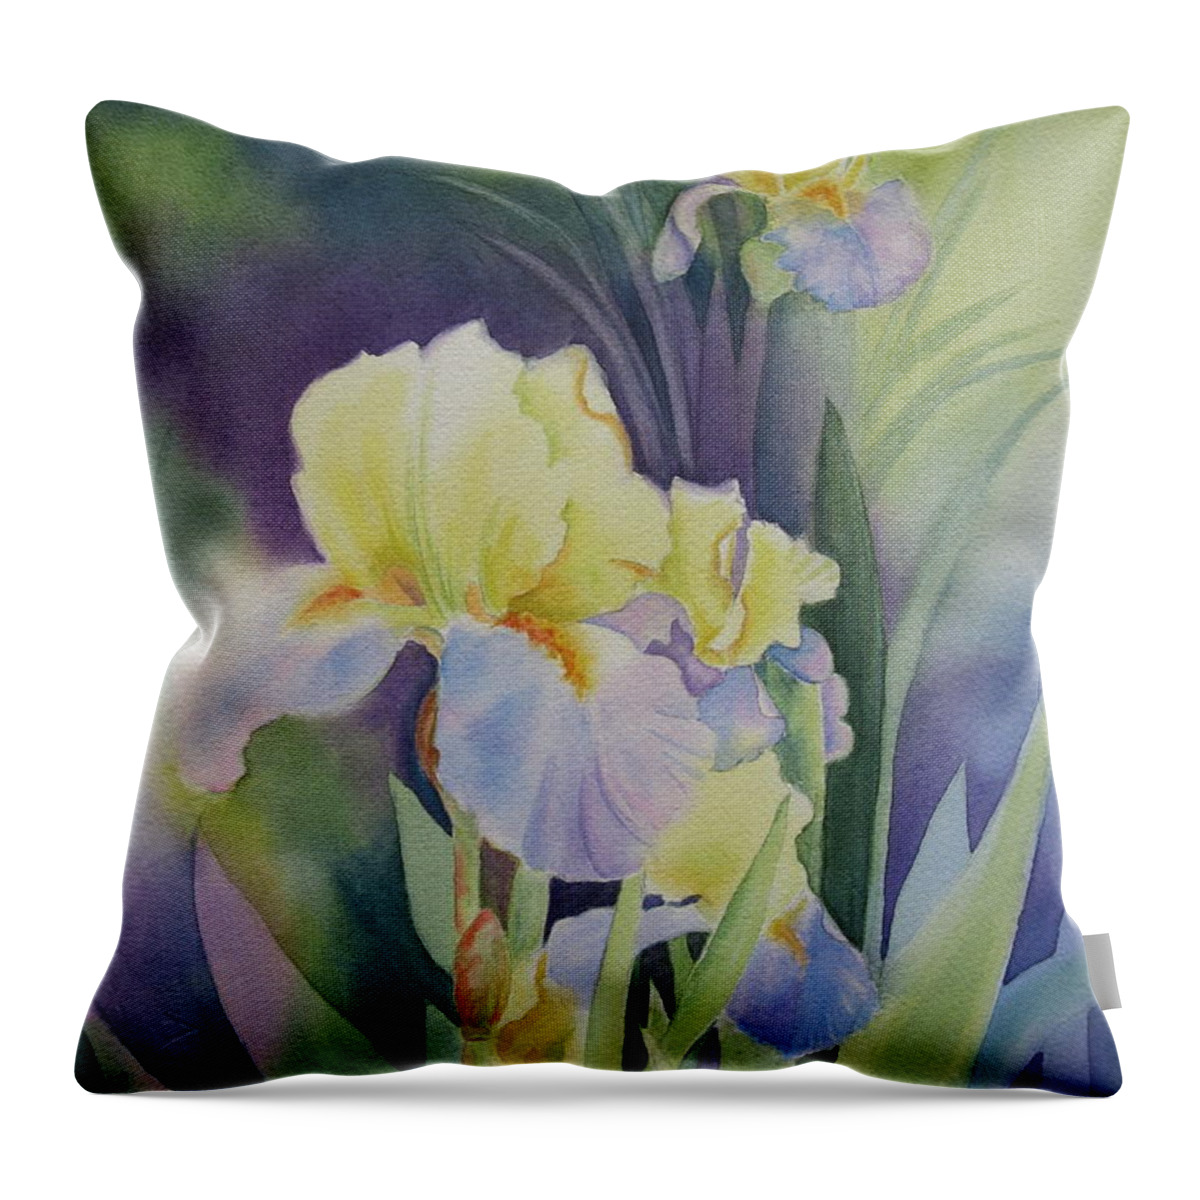 Iris Throw Pillow featuring the painting Iris by Deborah Ronglien